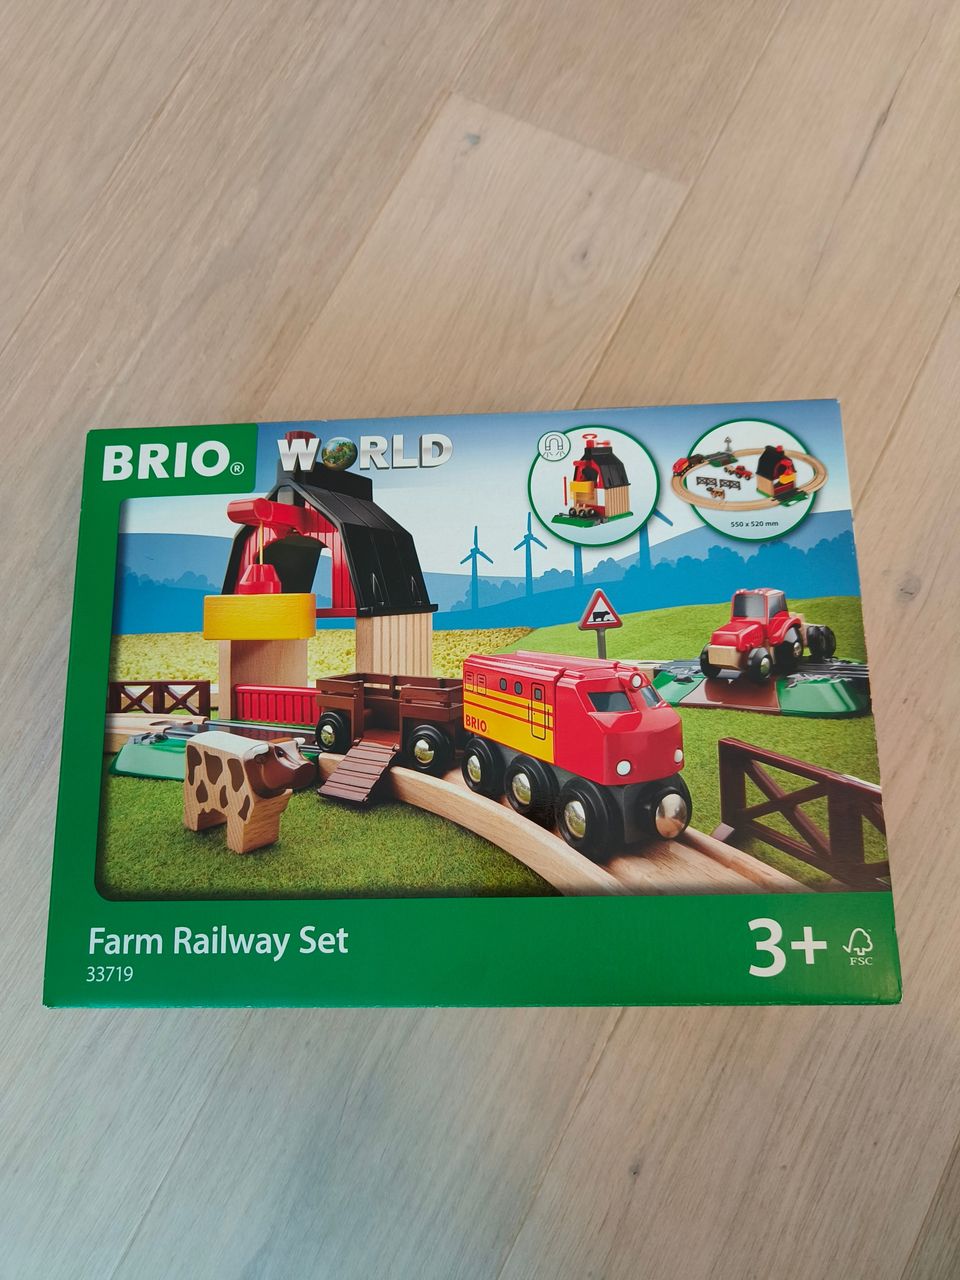 Uusi Brio Farm Railway Set 33719